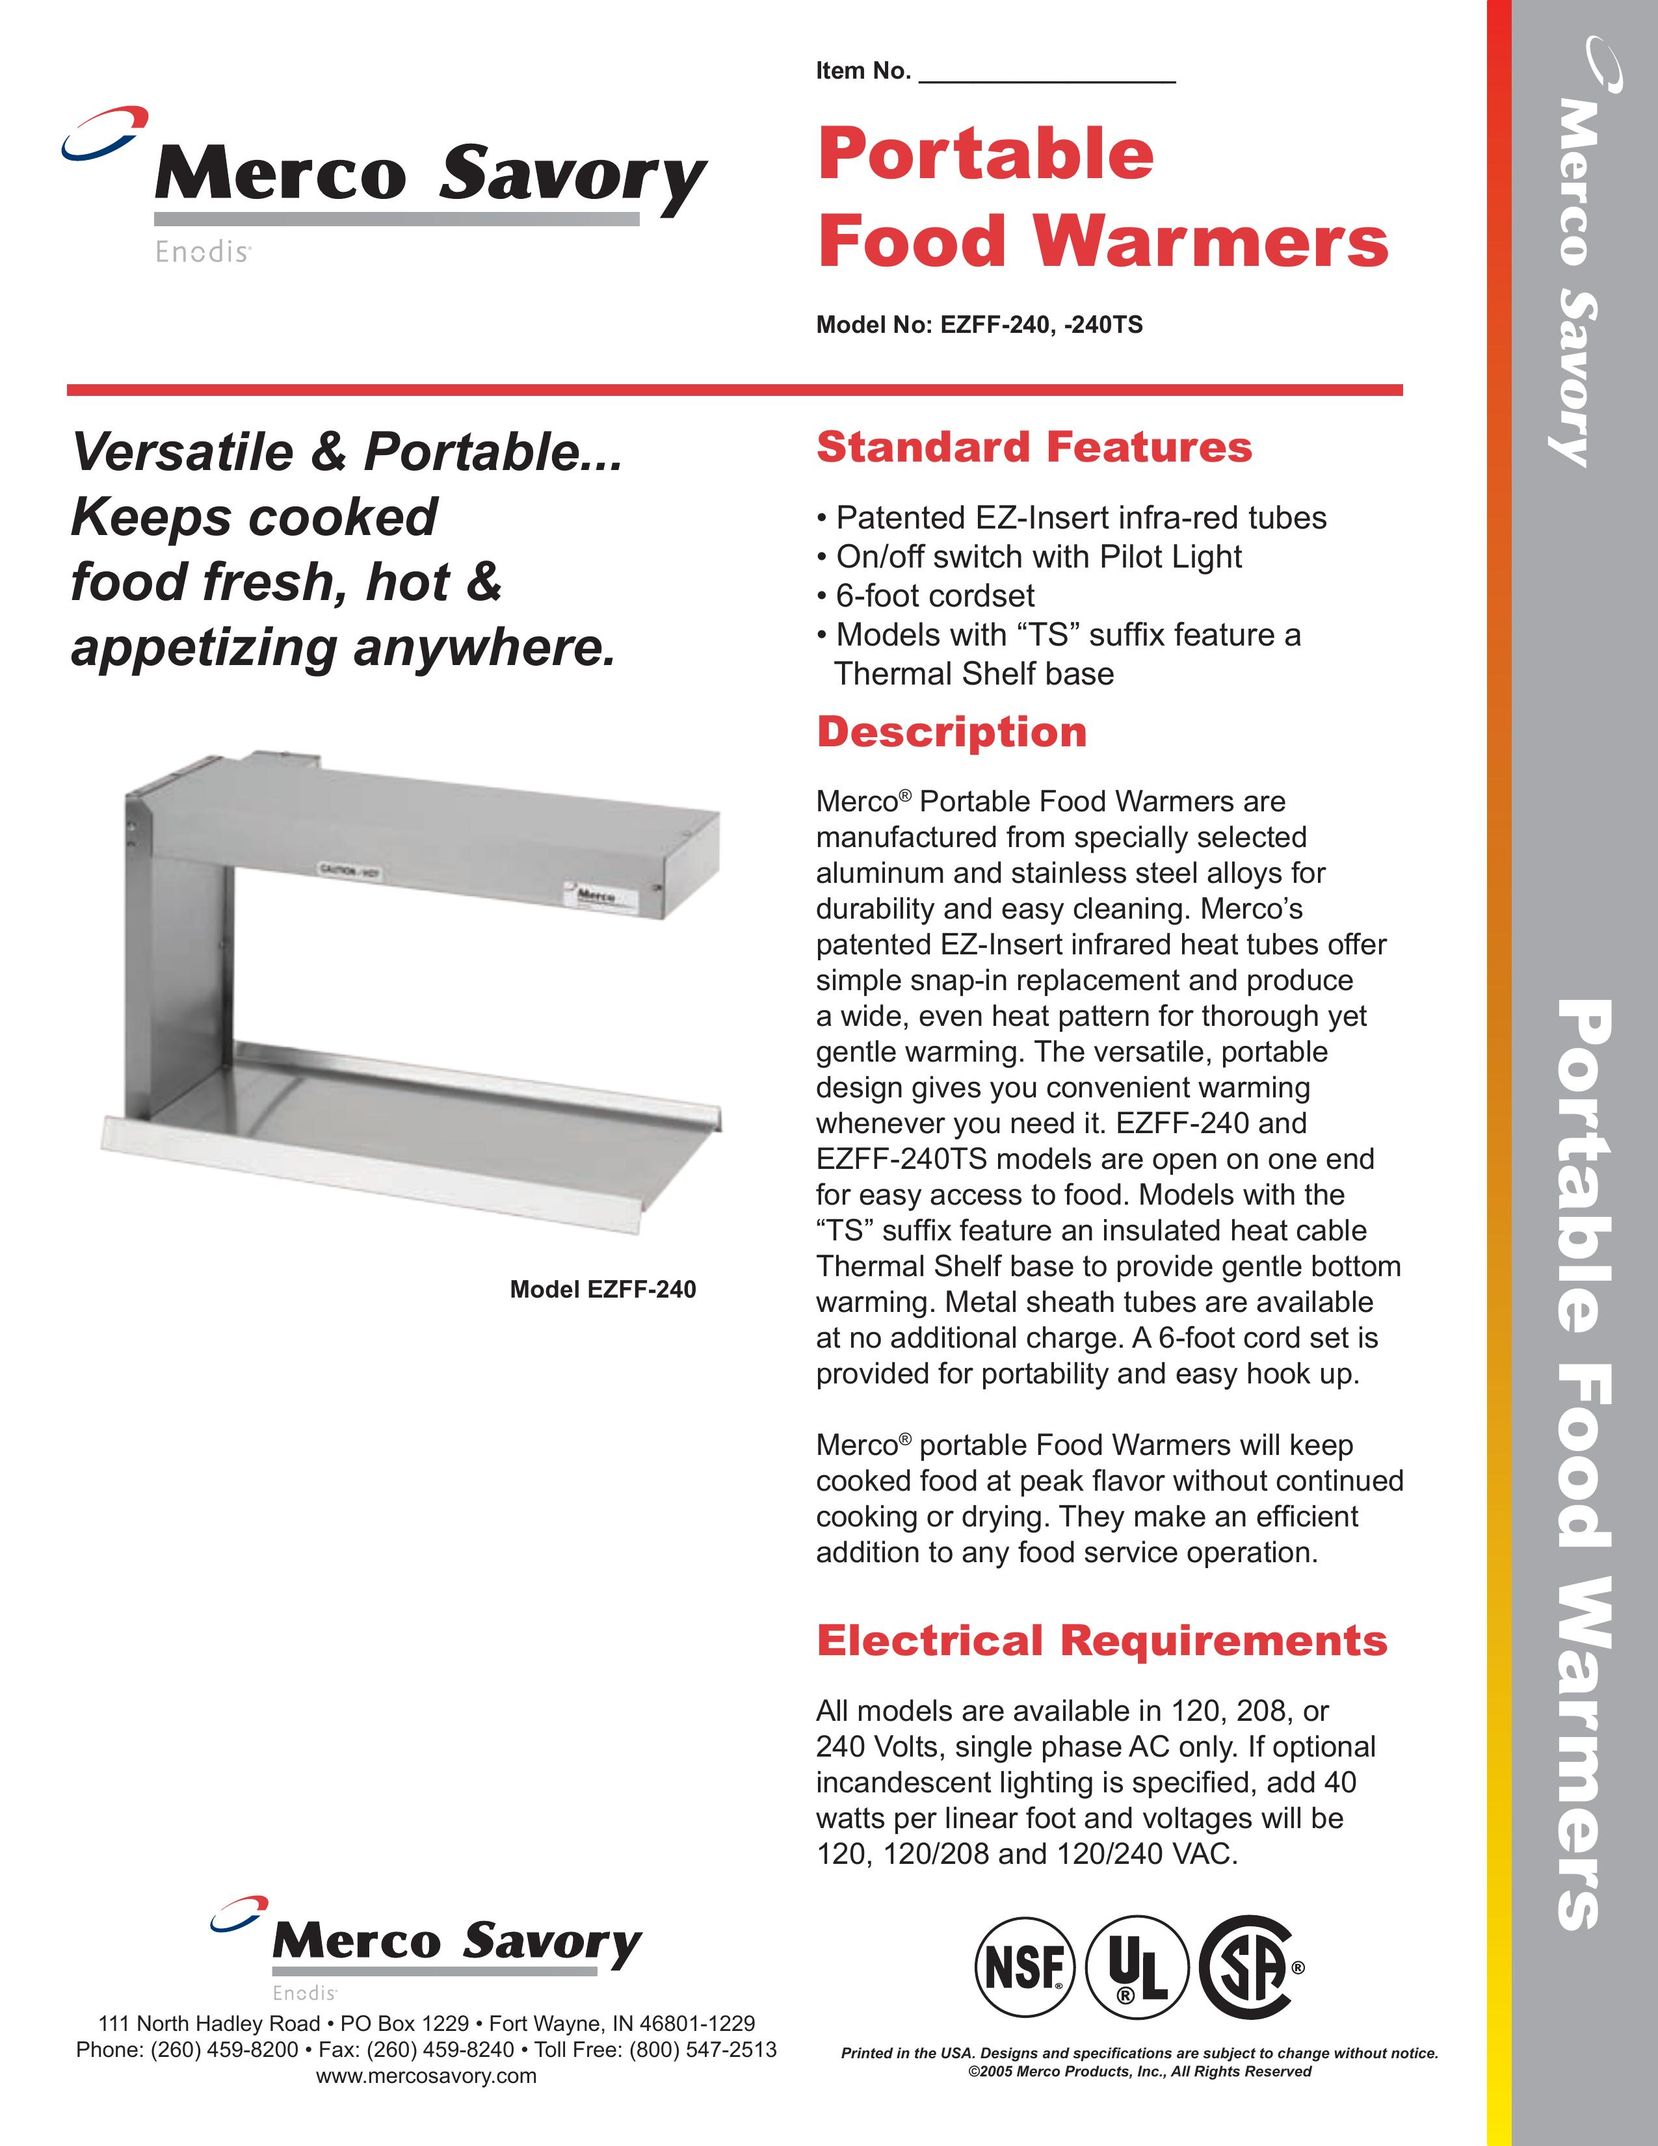 Merco Savory EZFF-240 Food Warmer User Manual